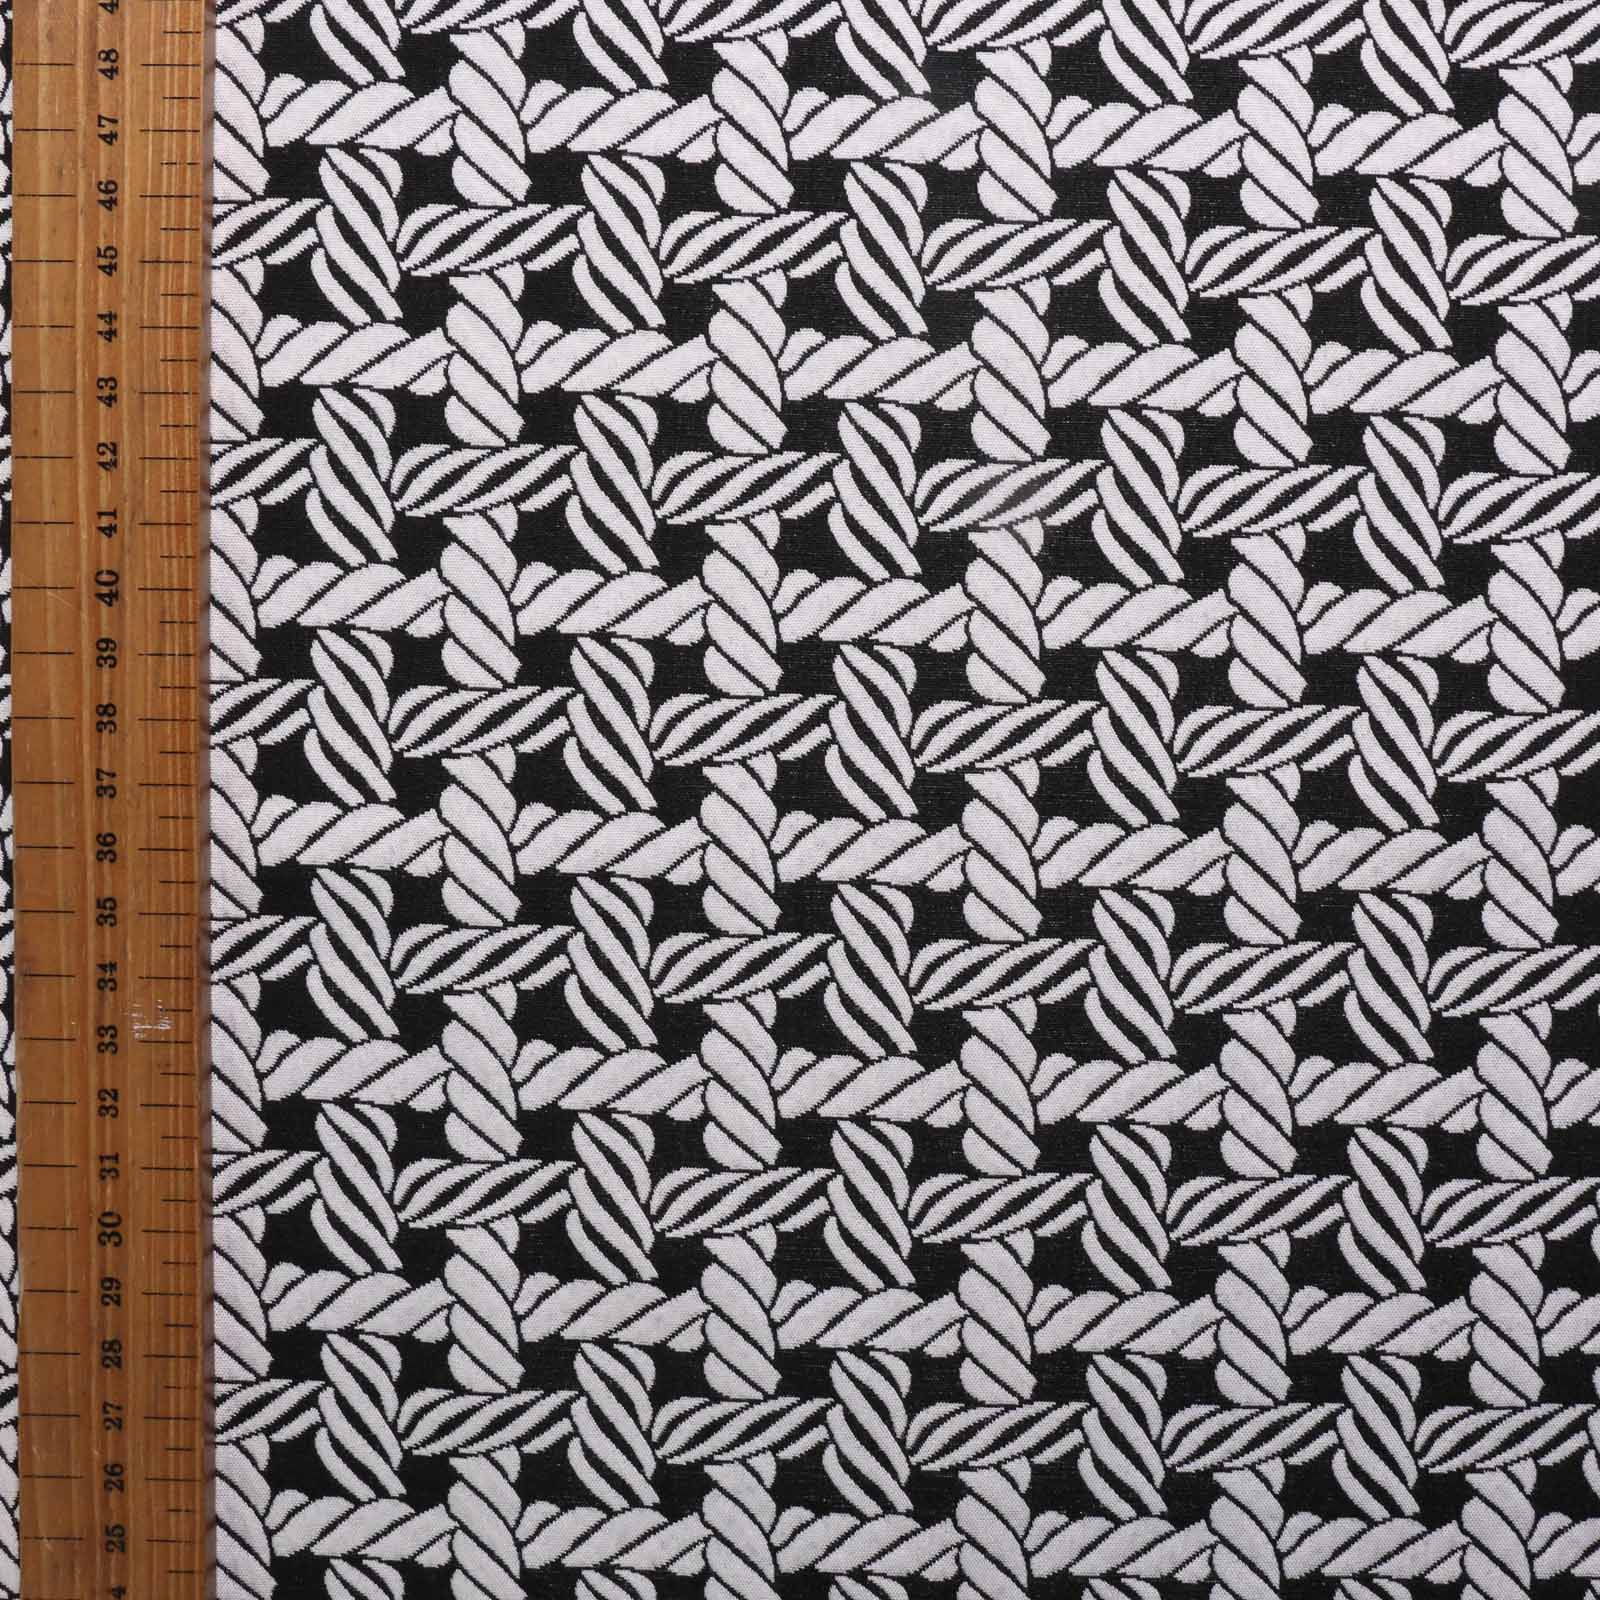 metre jacquard black white nautical rope design fabric